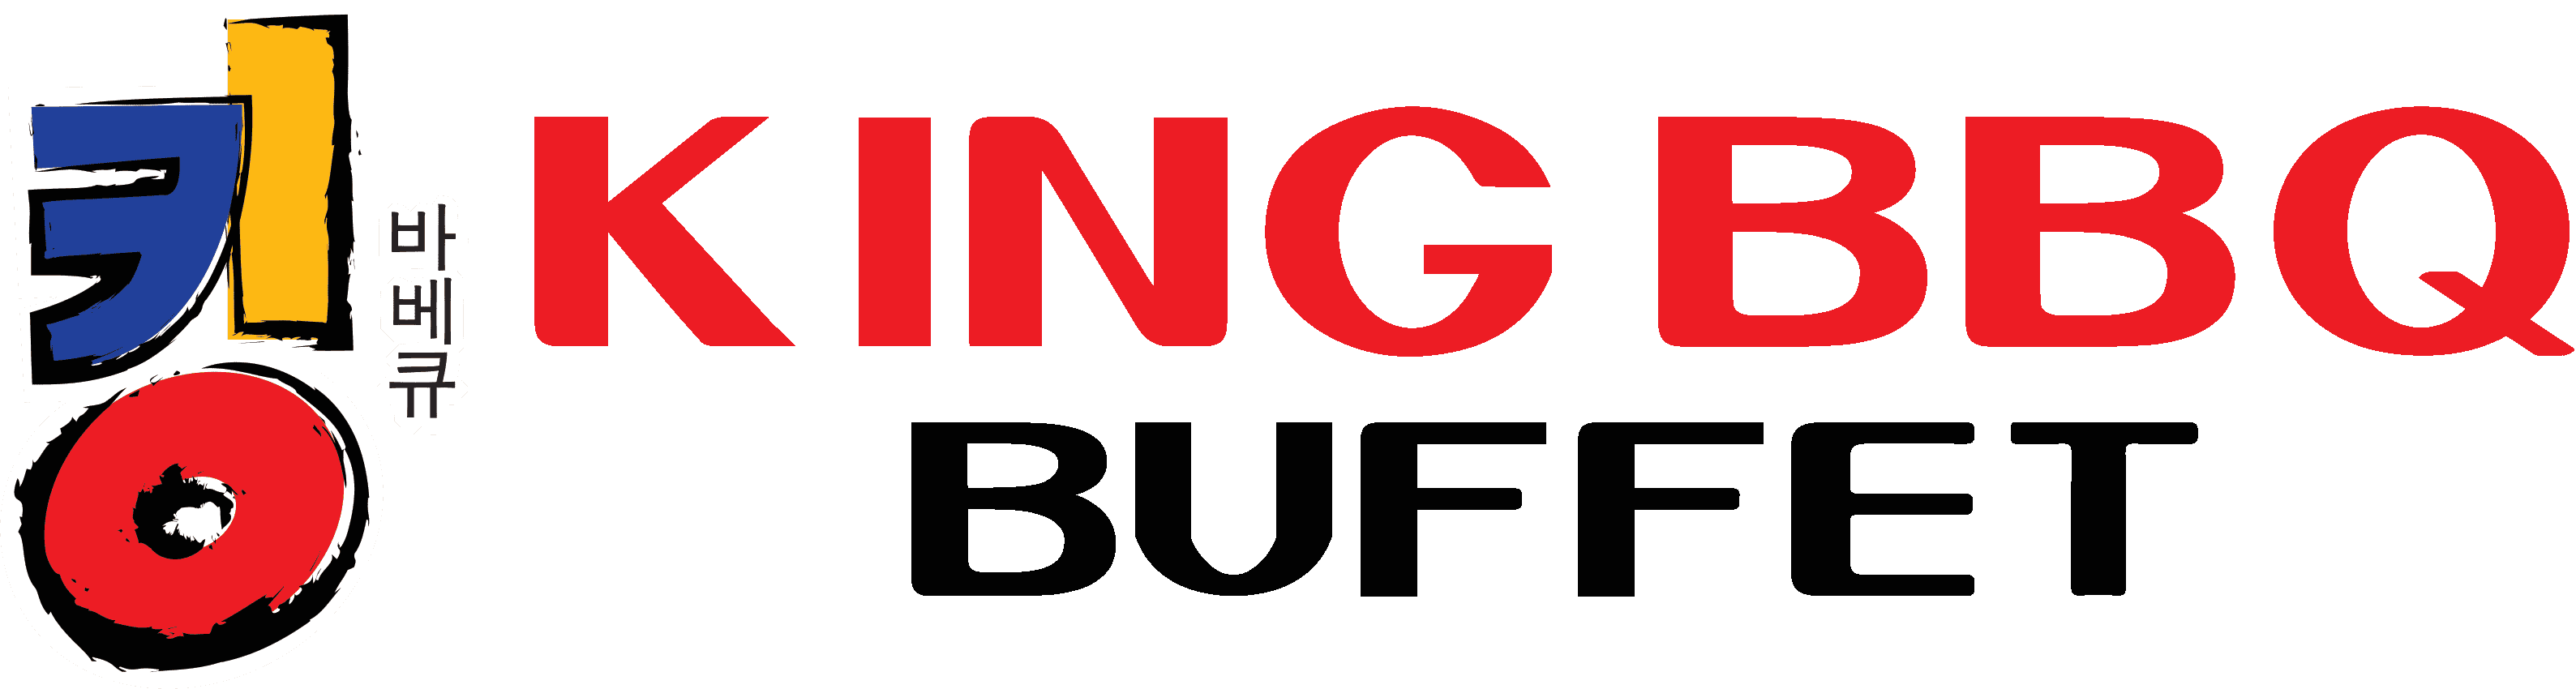 King-BBQ-Buffet